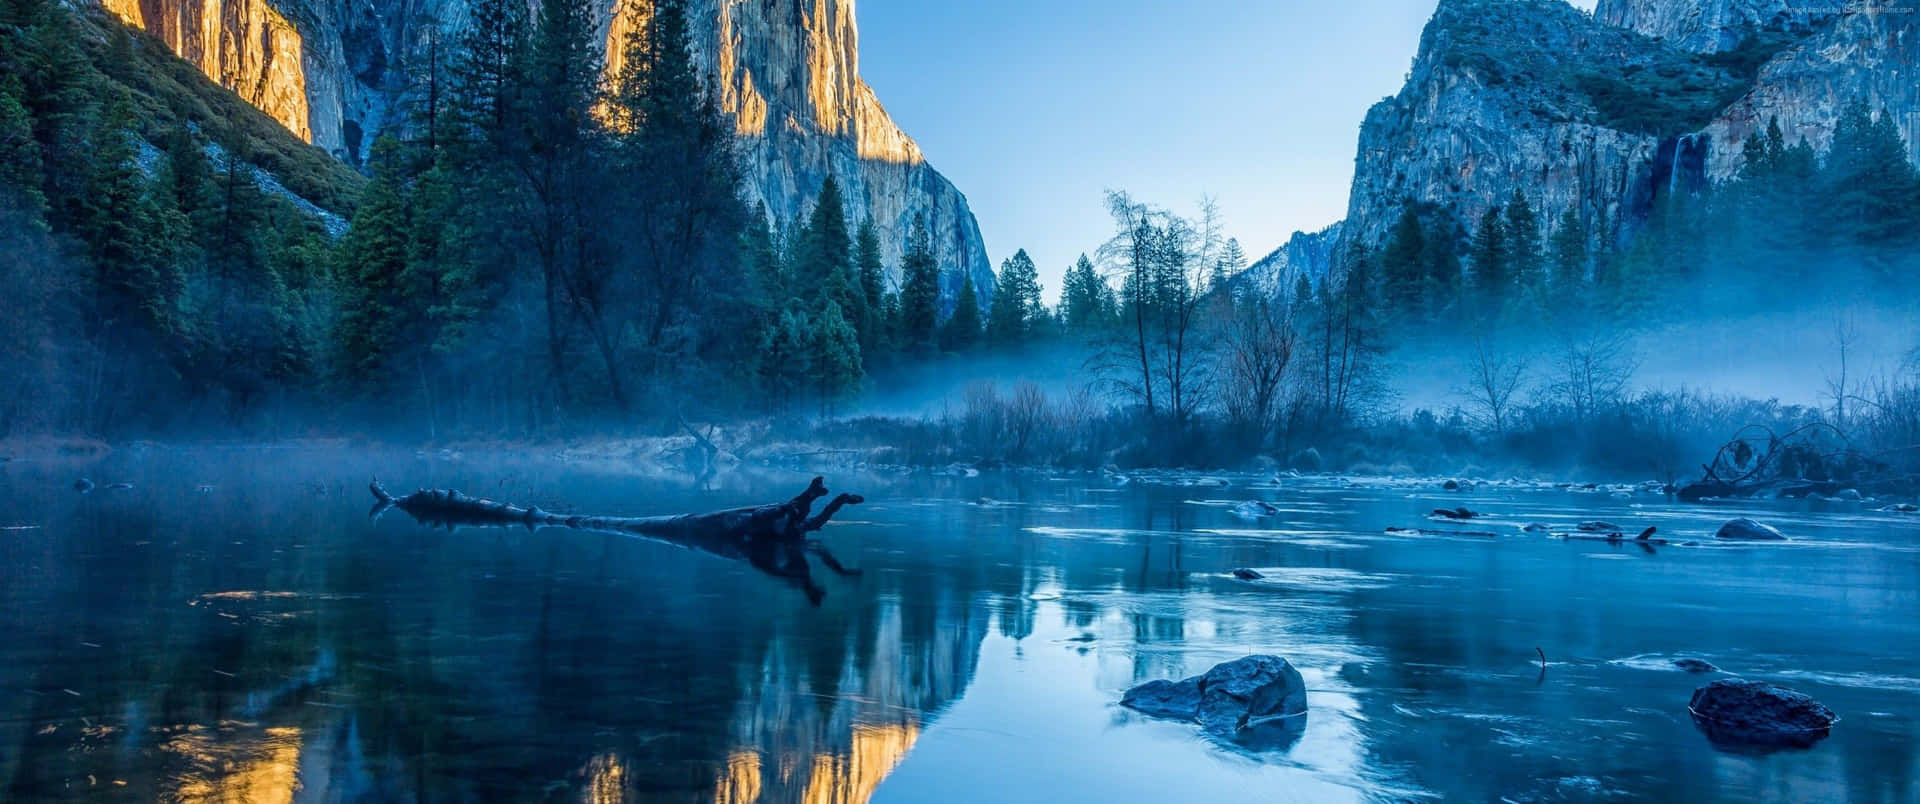 Parquenacional Yosemite, Valle De Yosemite, California. Fondo de pantalla